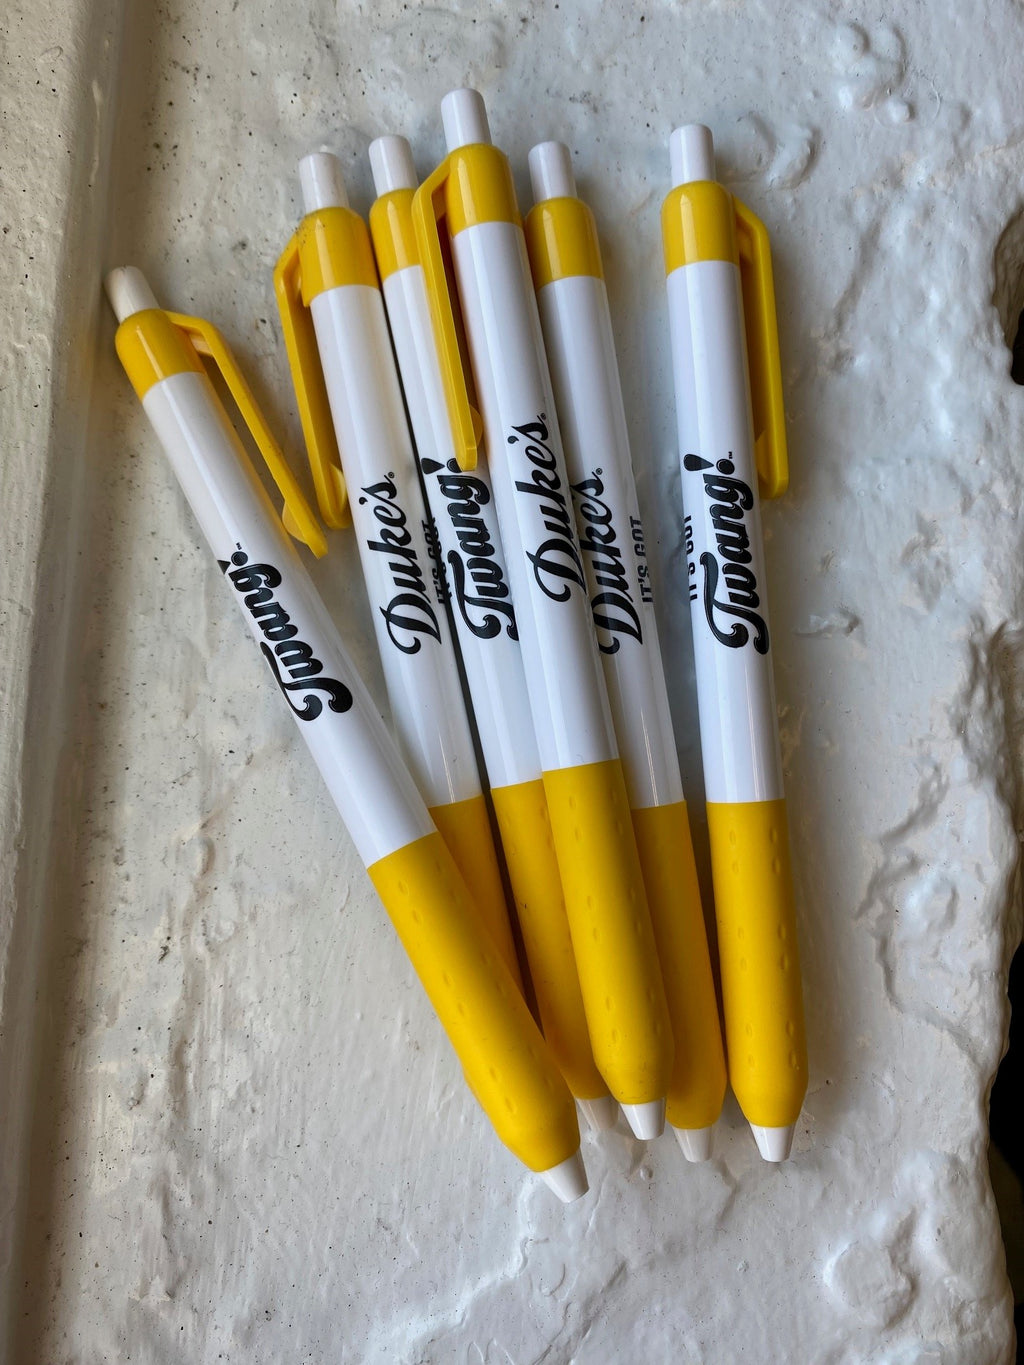 Duke's Conference Pens